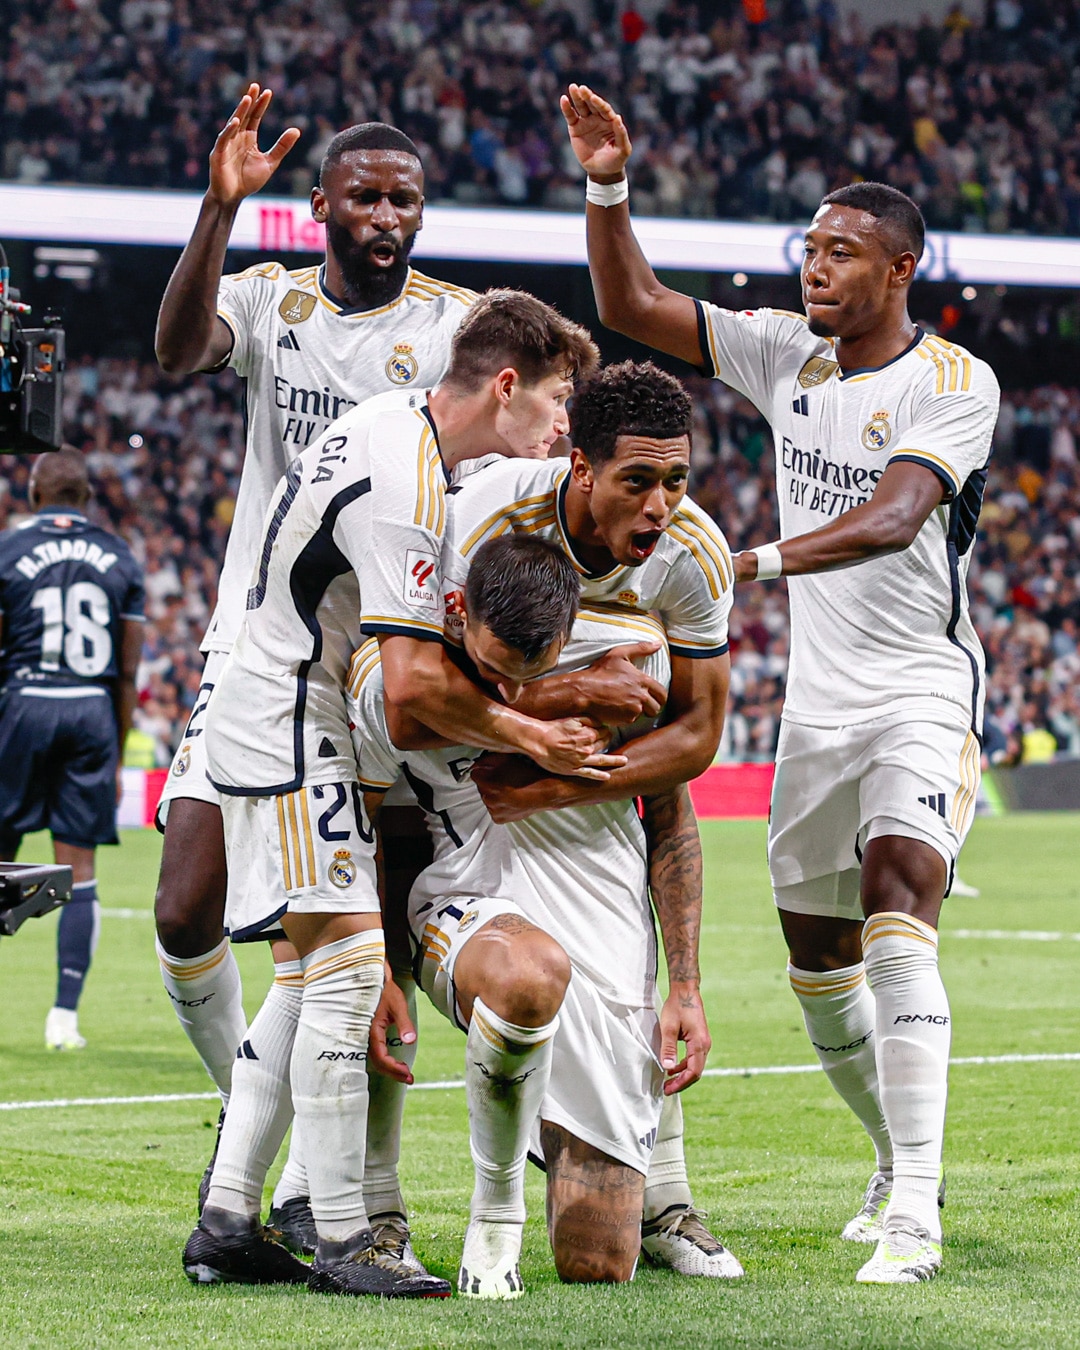 Jude bellingham bỏ lỡ kỷ lục lịch sử, Real Madrid thắng nhọc nhằn Real Sociedad - Ảnh 2.